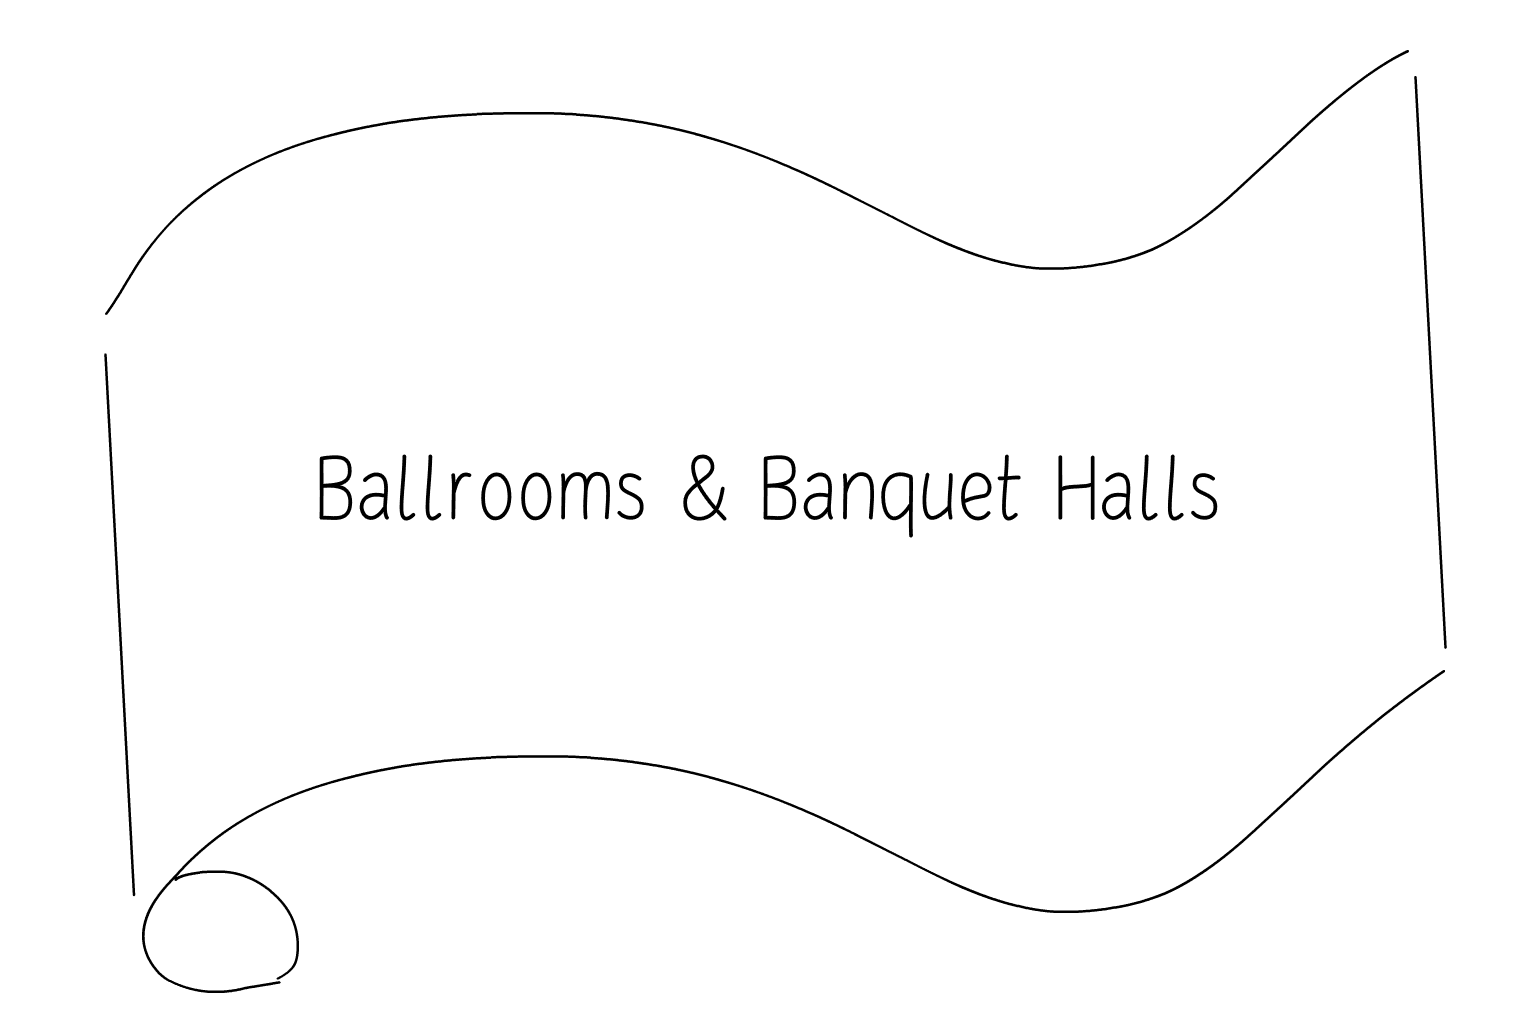 Illustration of wedding ballroom & banquet hall